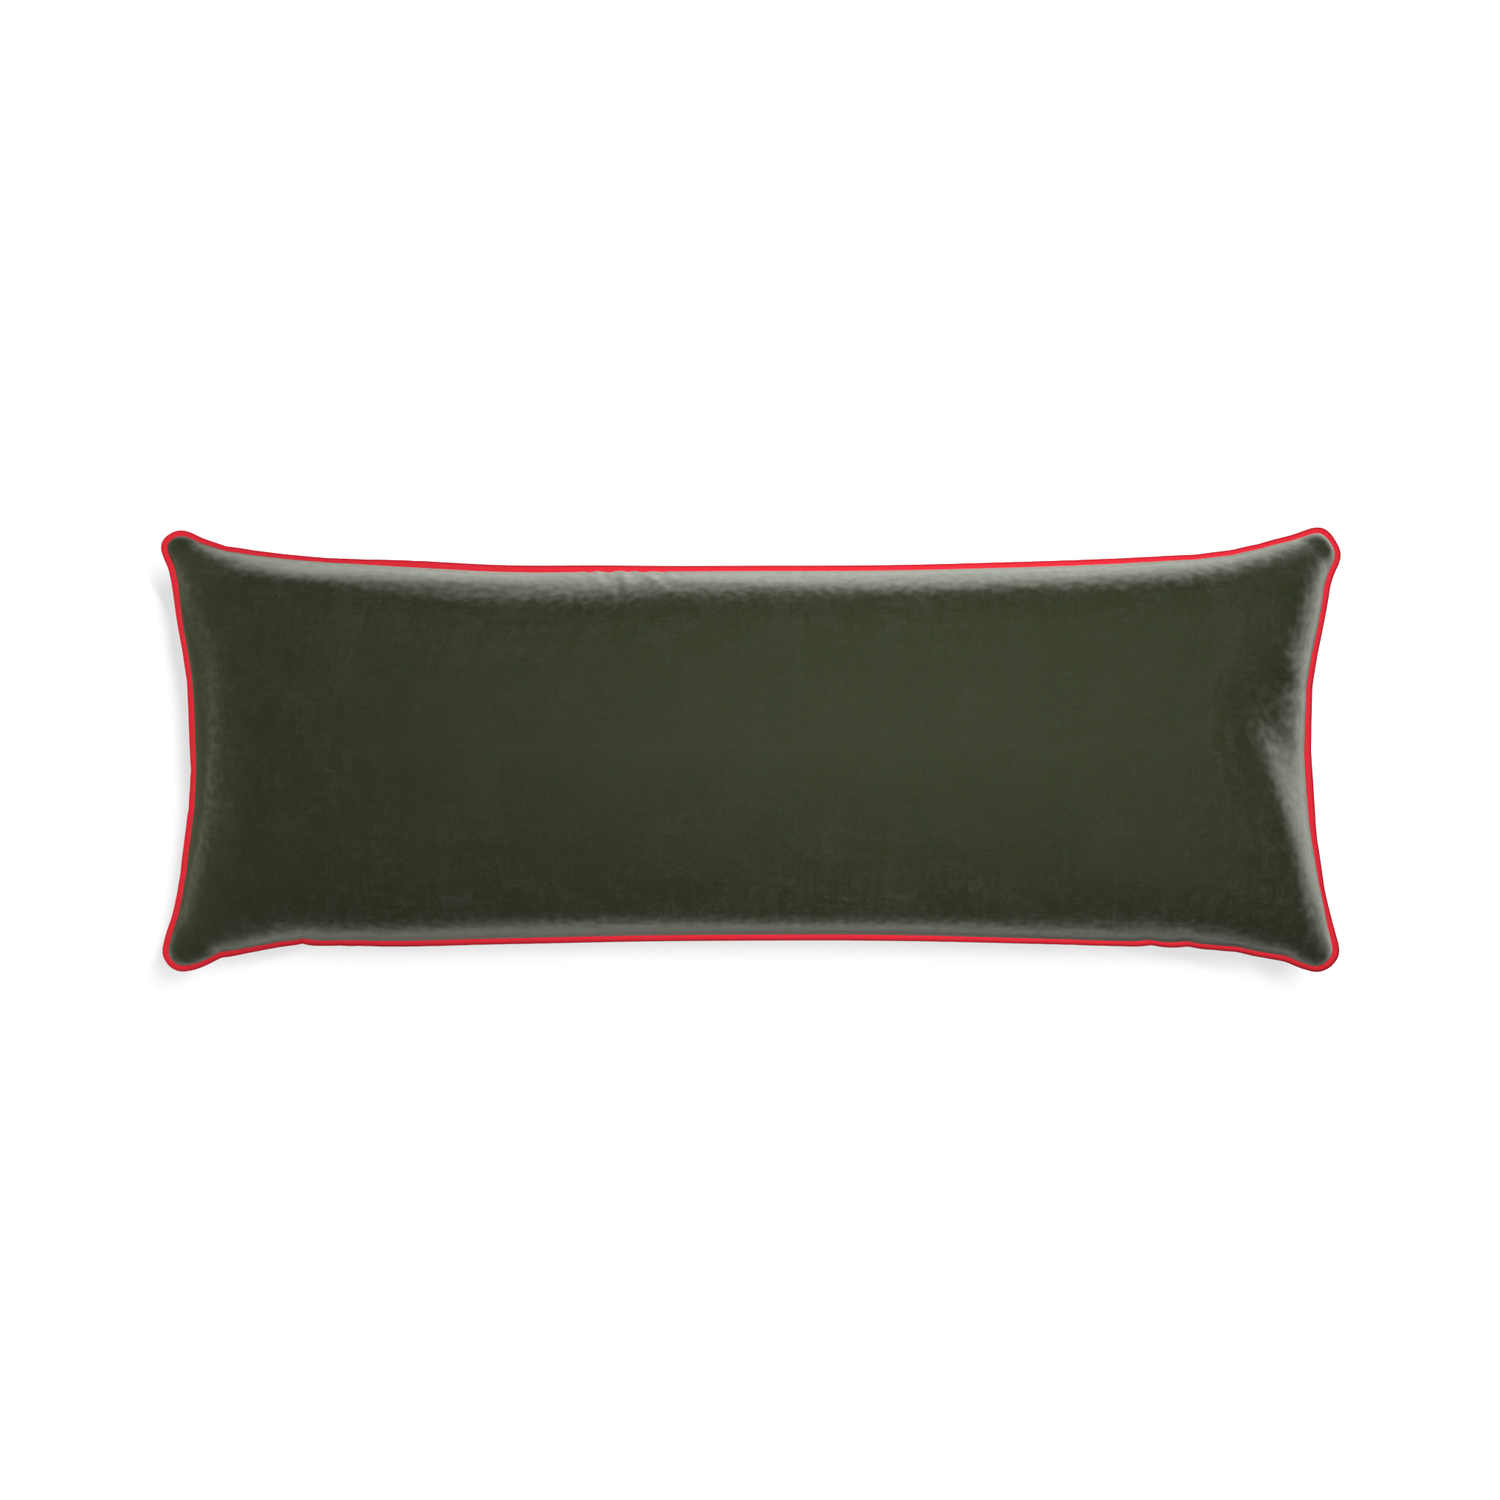 Xl-lumbar fern velvet custom pillow with cherry piping on white background